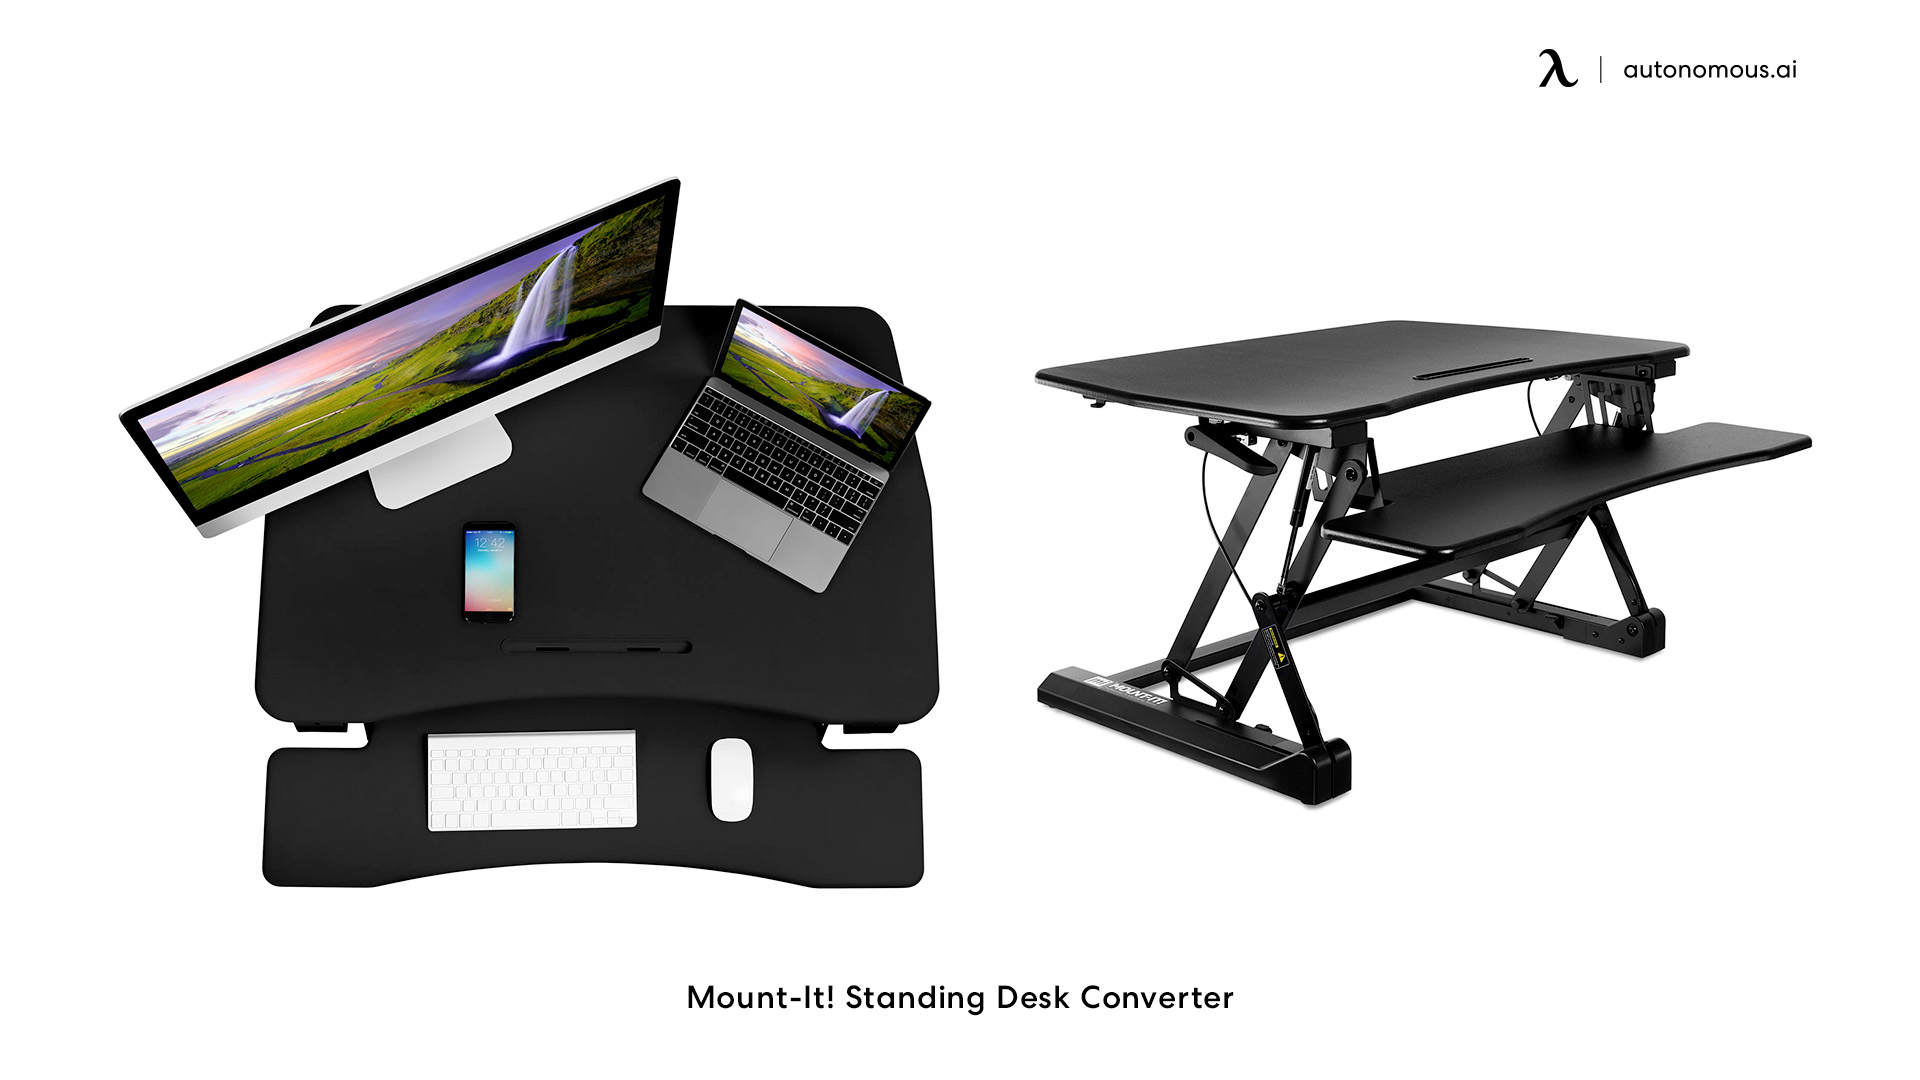 Mount-It! Standing Desk Converter